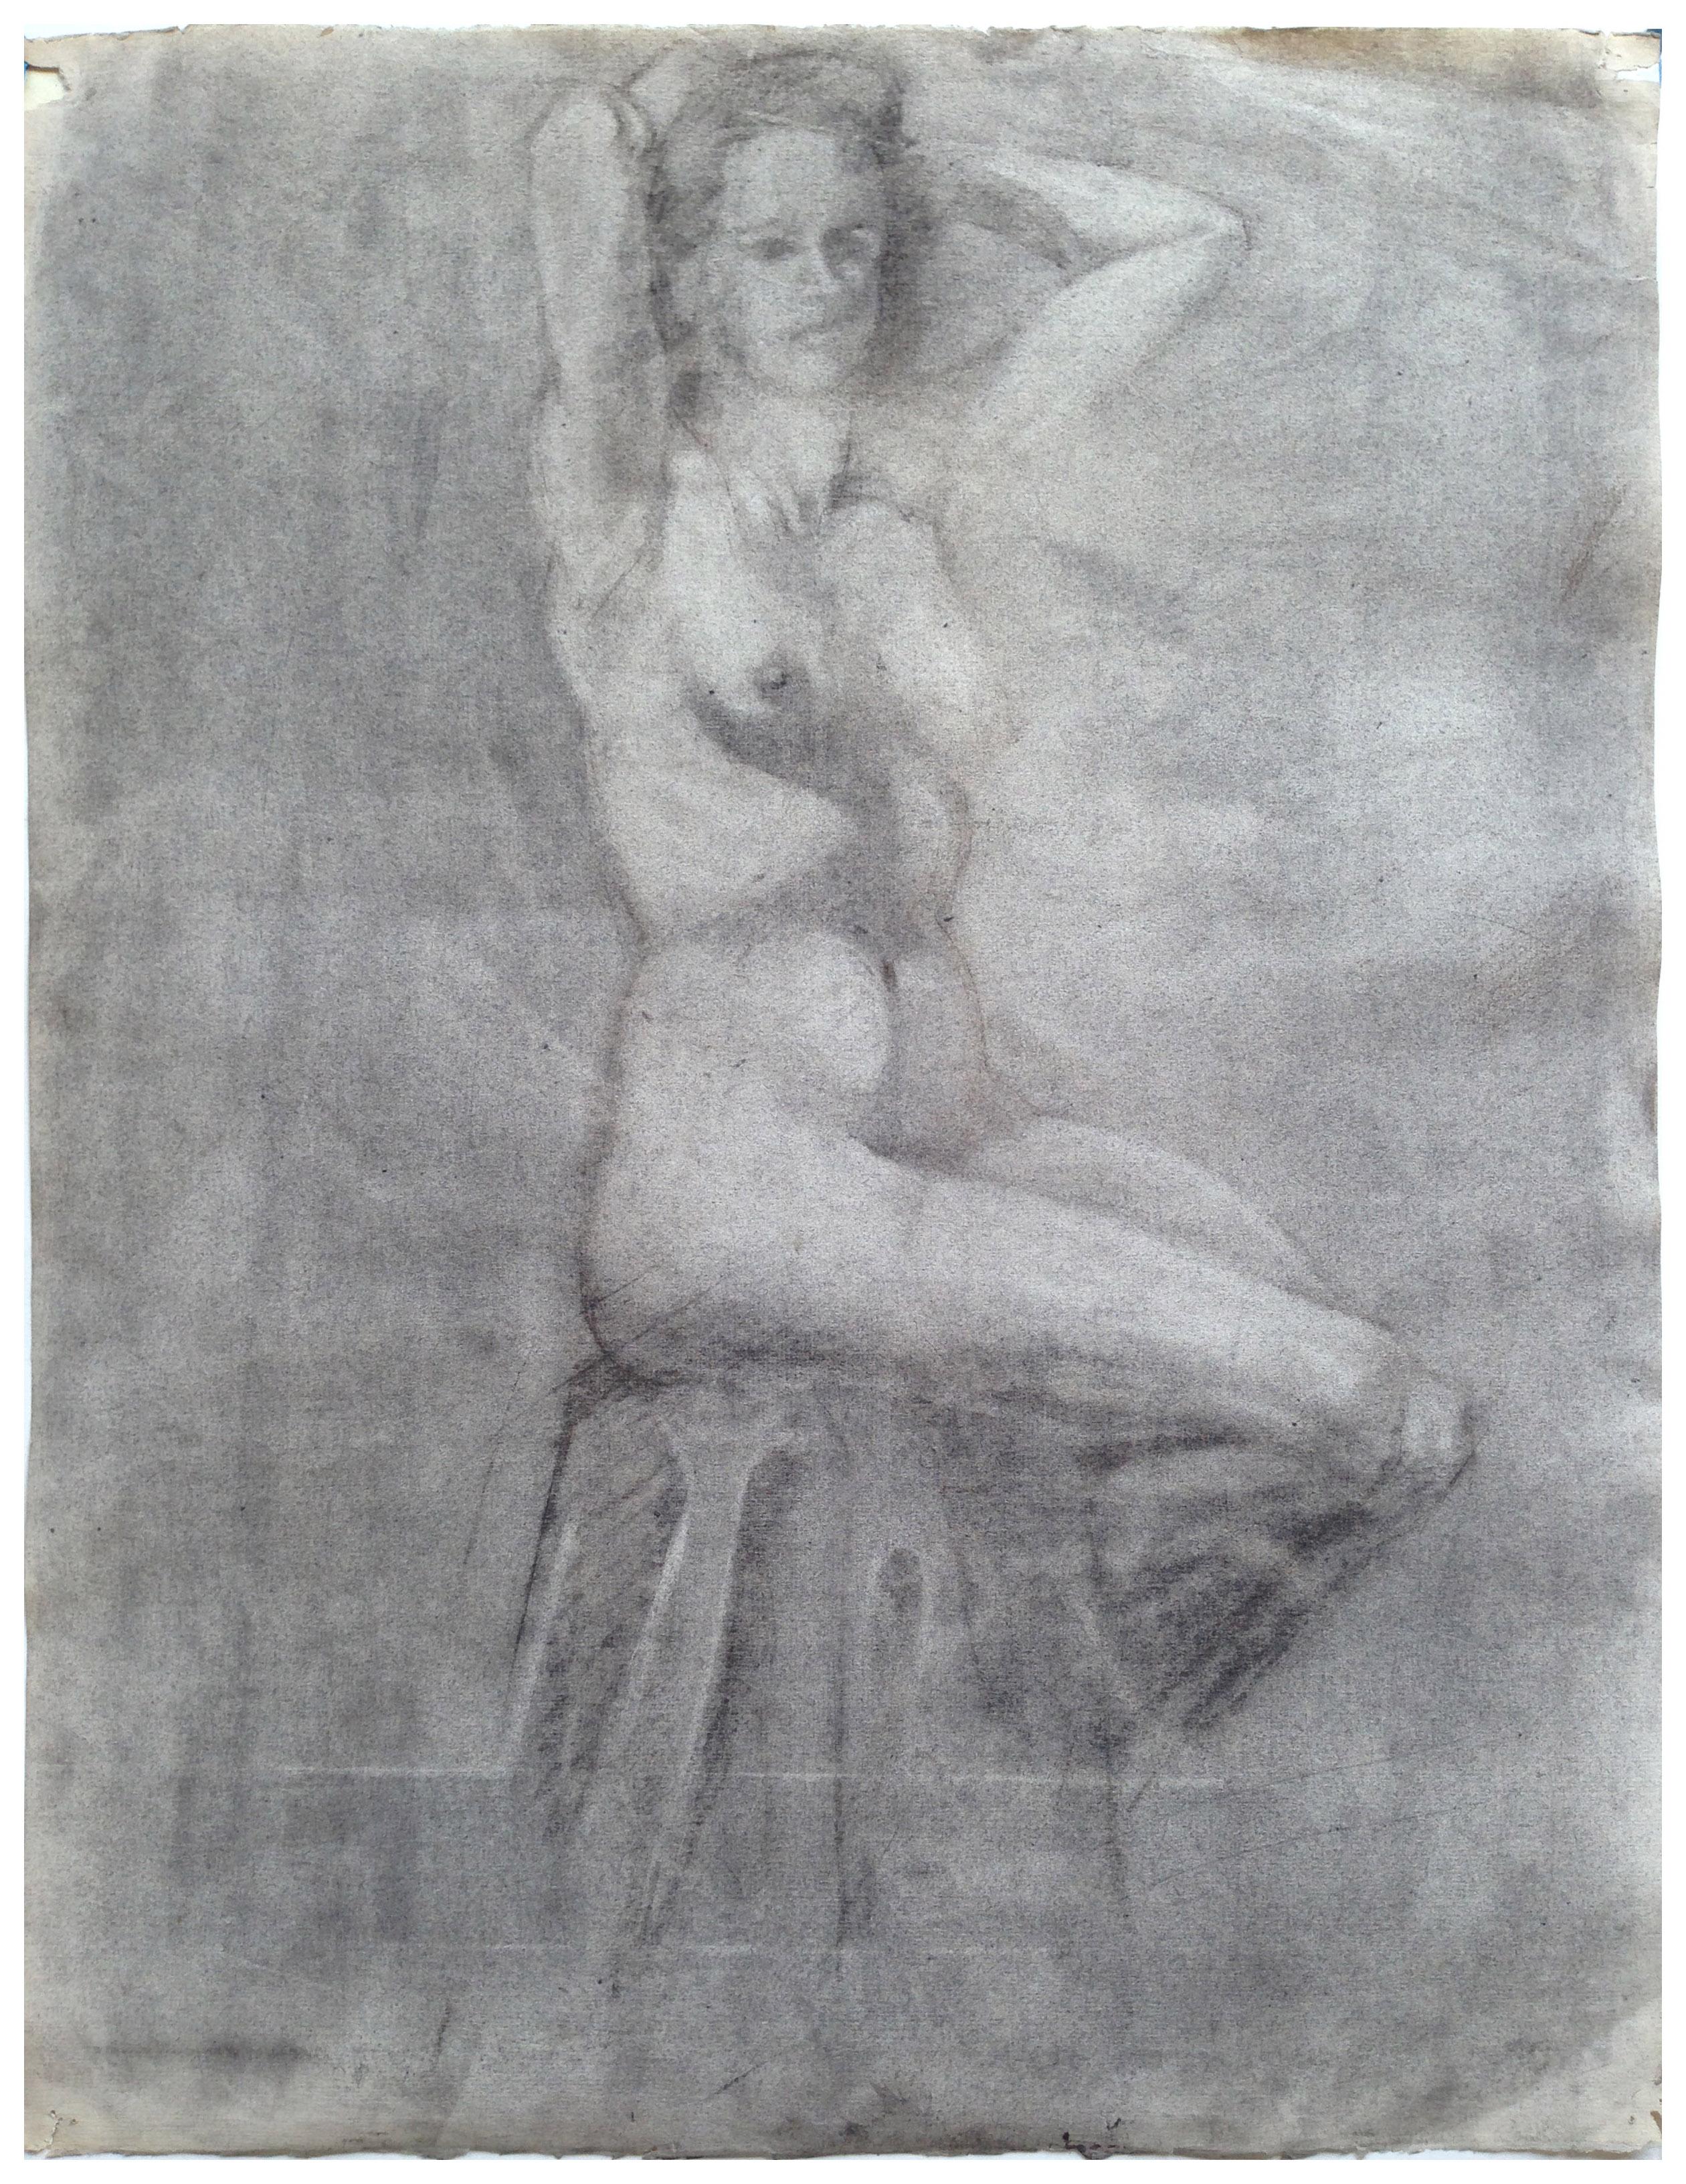 1940s Seated Nude Figure Study 